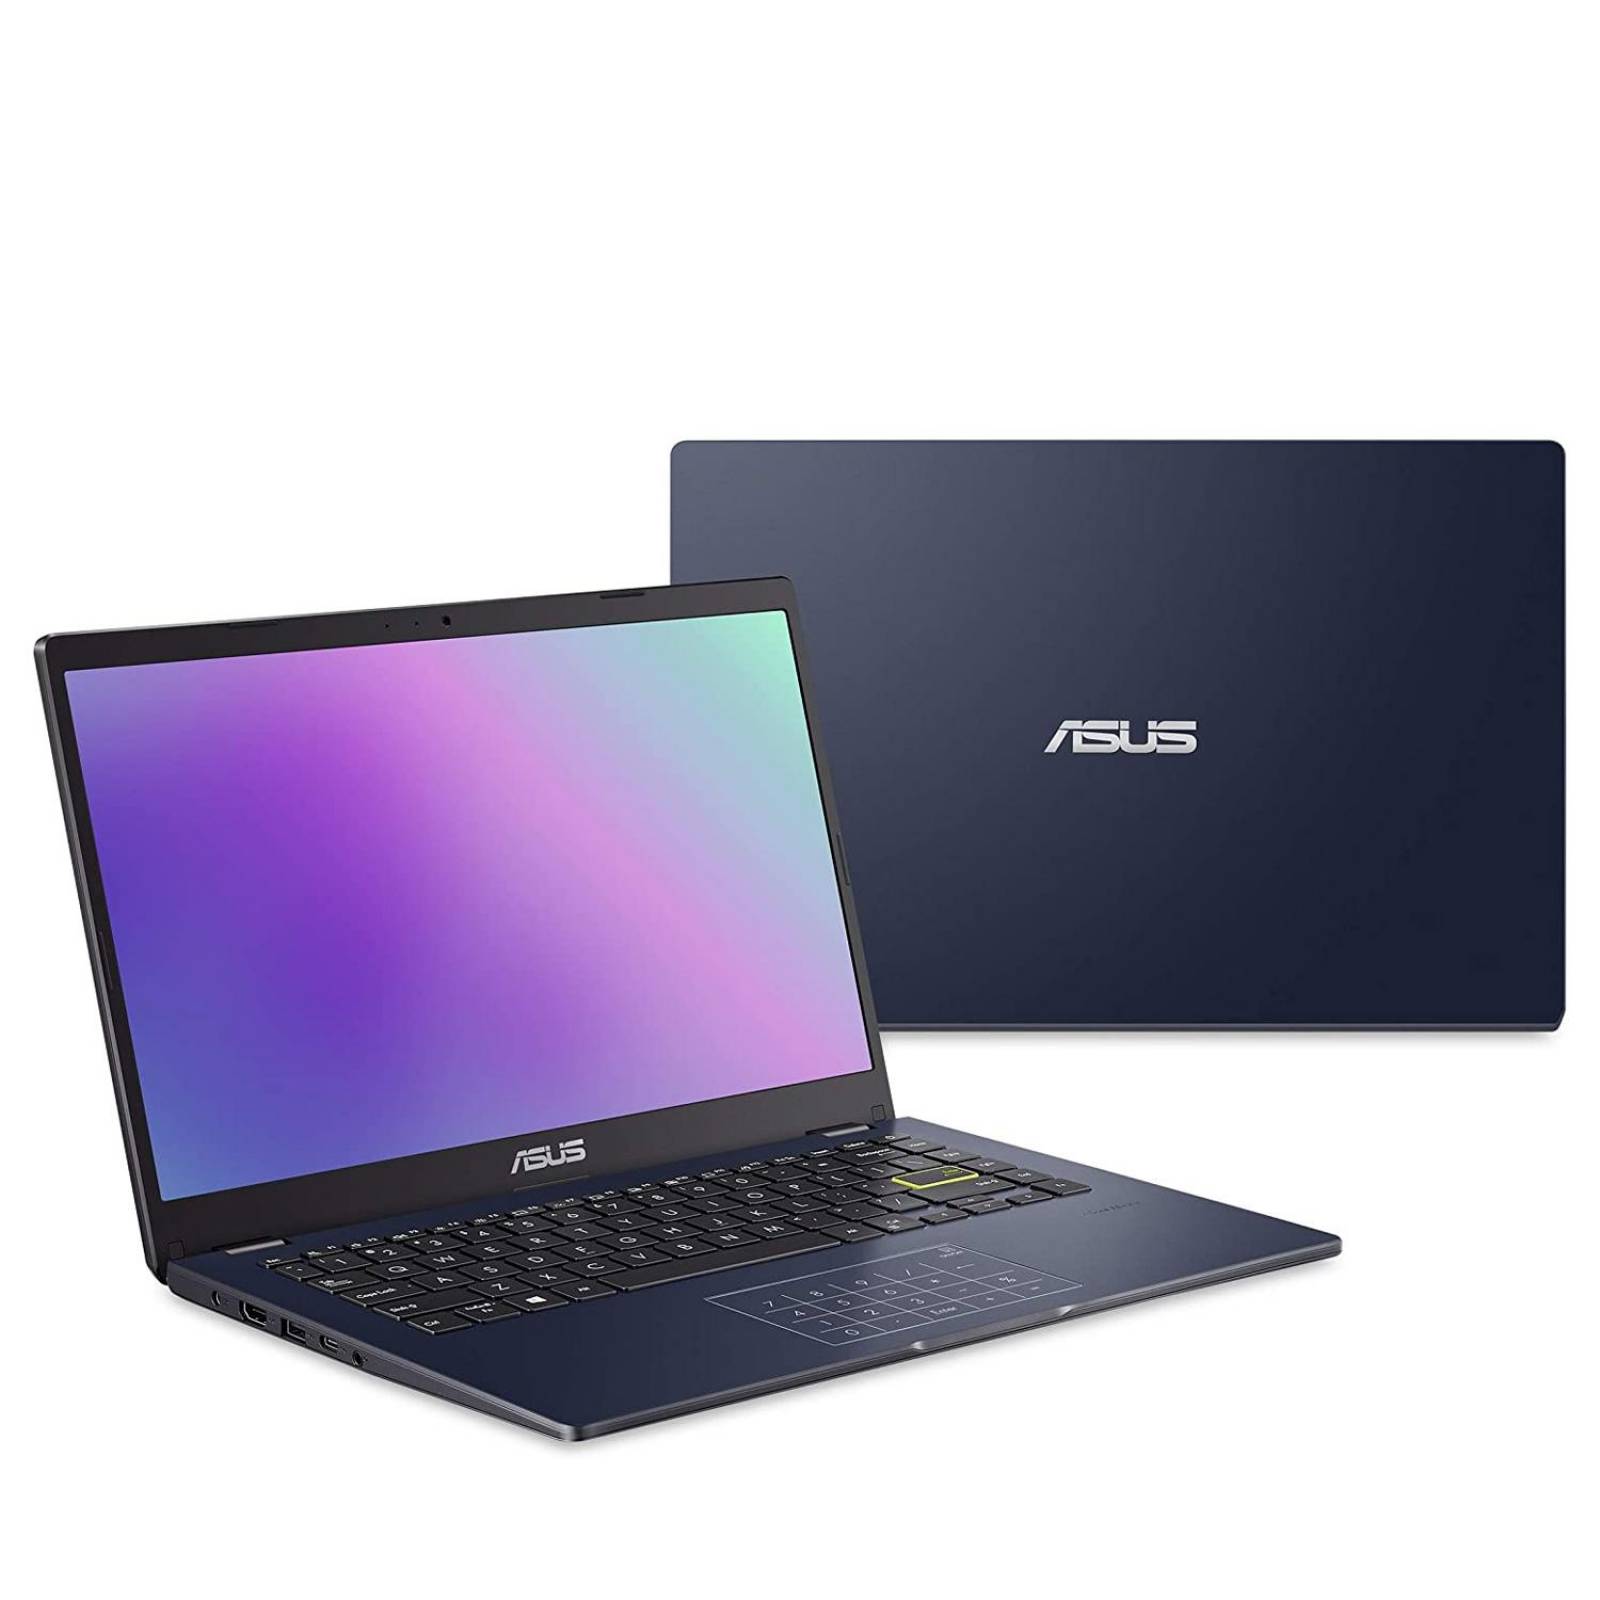 Laptop Asus L410ma 14 Celeron N4020 4gb 128gb Ssd Windows 10 Home 9910